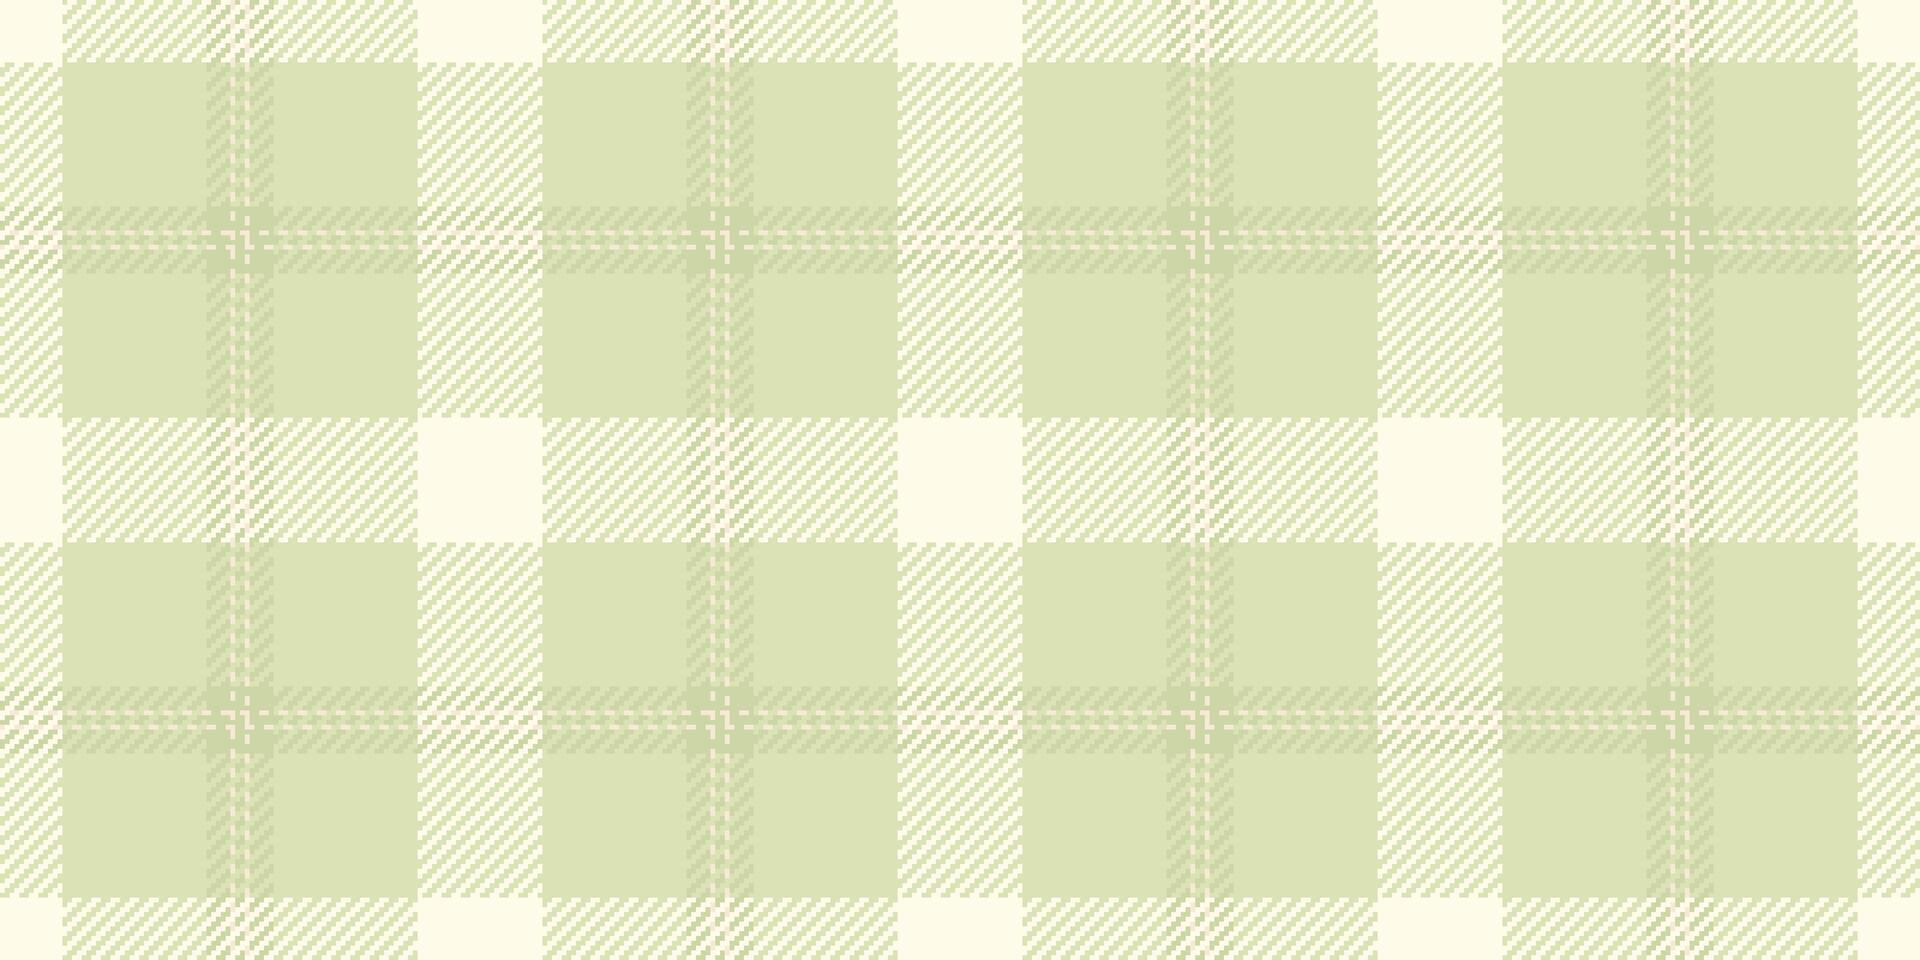 single kleding stof textiel plaid, herhalende Schotse ruit naadloos textuur. verzameling patroon achtergrond controleren vector in licht kleur.